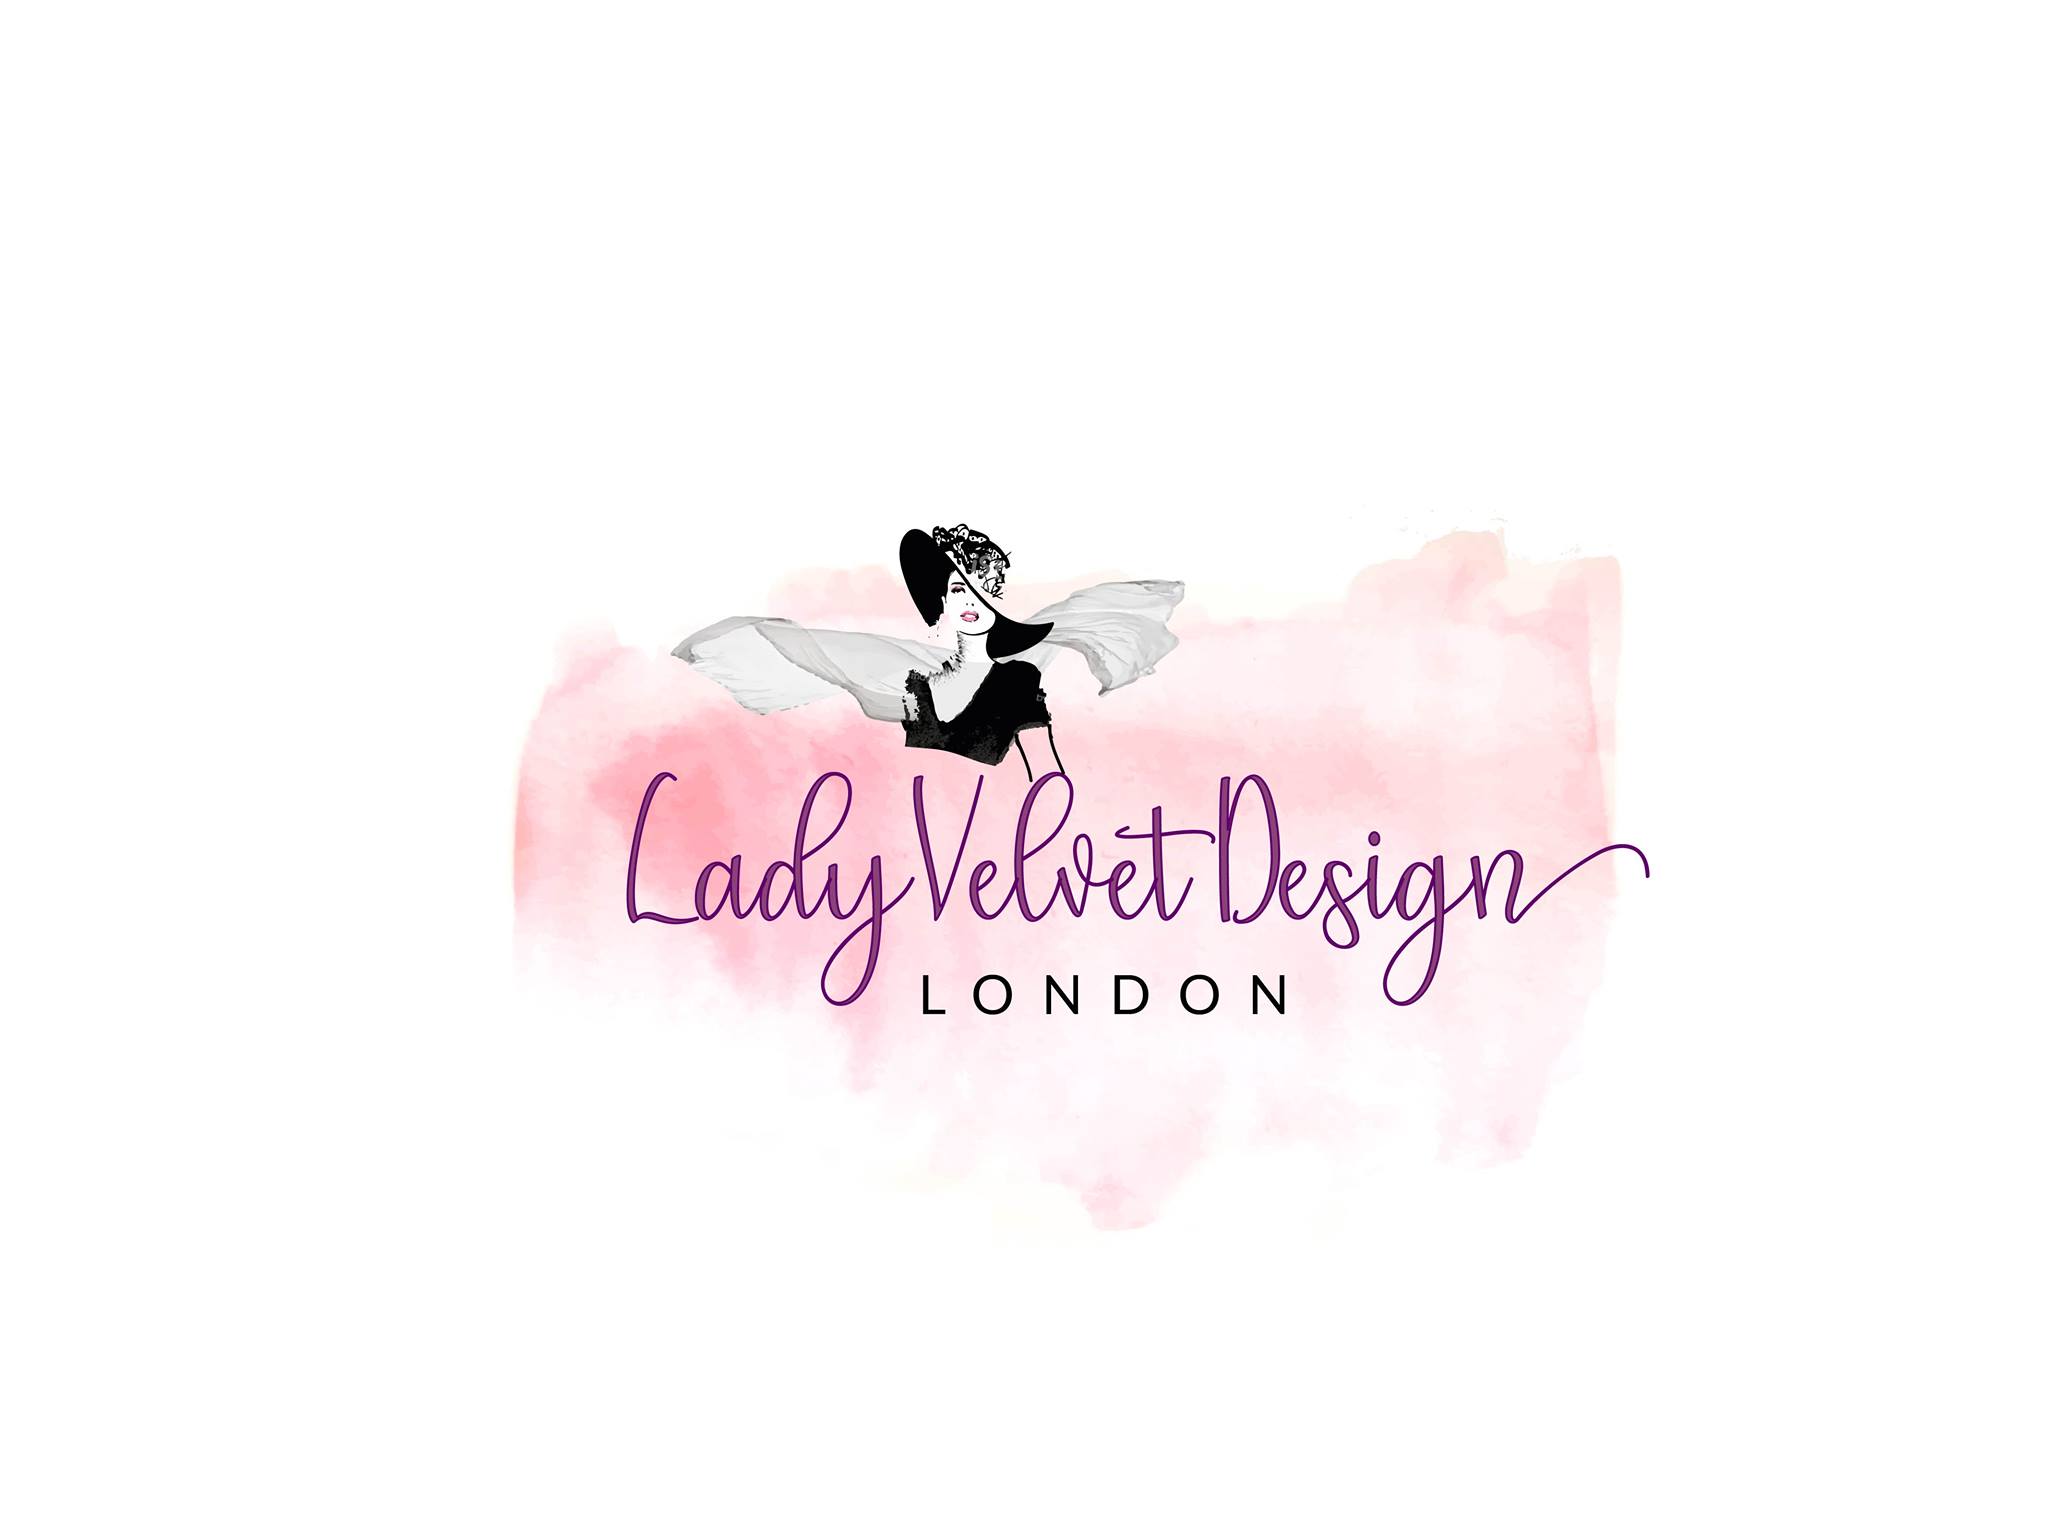 EXHIBITOR: Lady Velvet Design